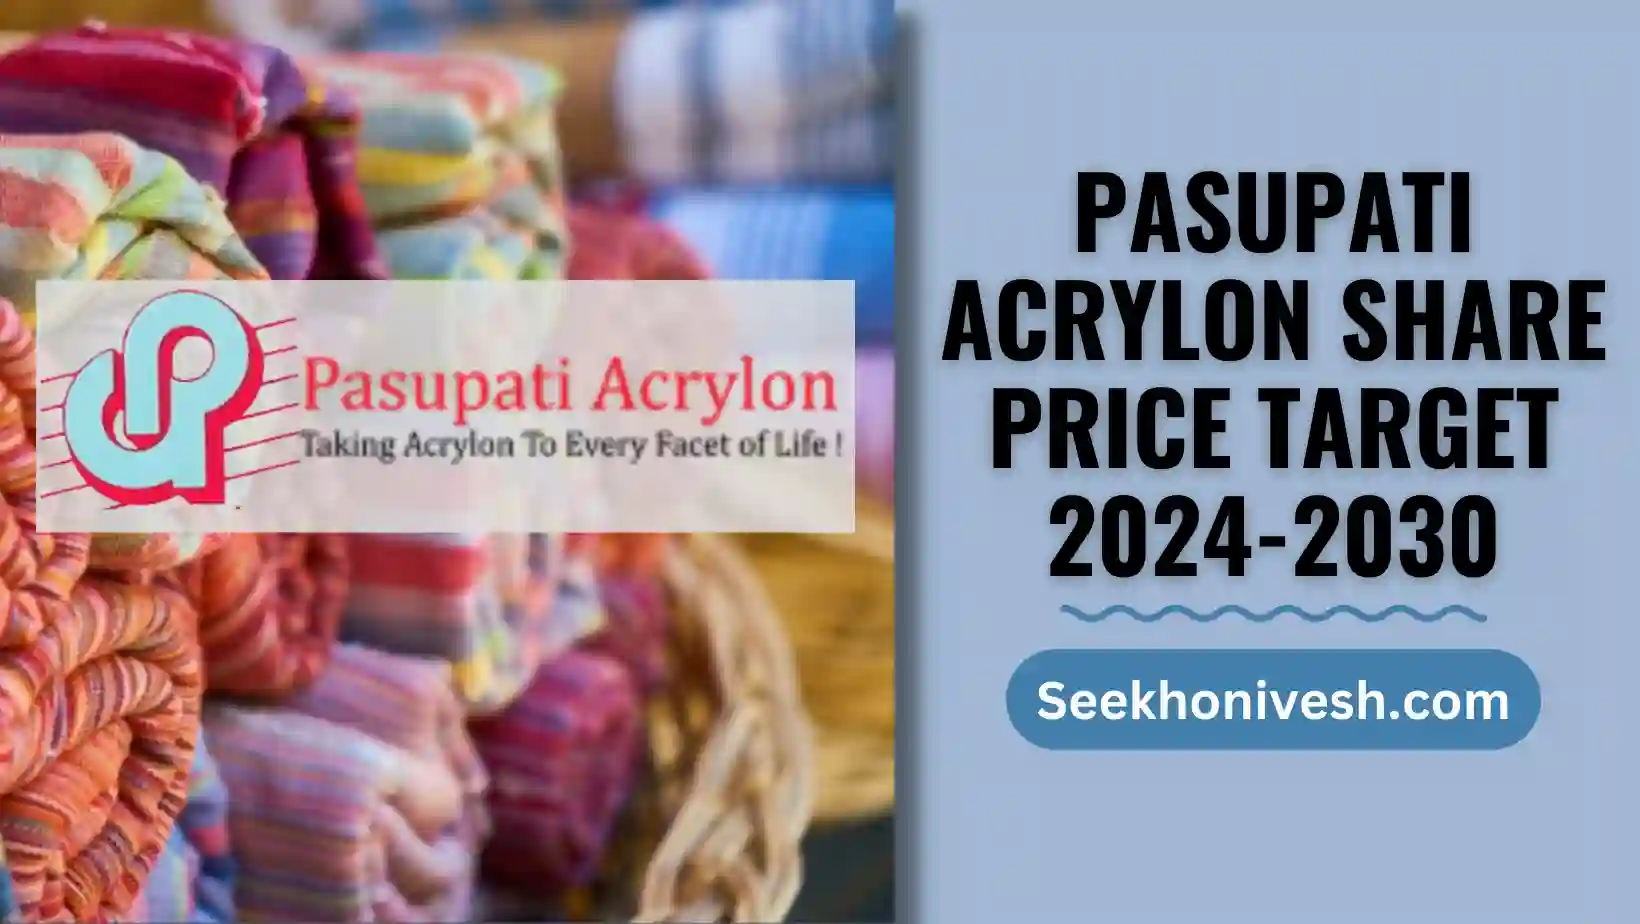 Pasupati Acrylon Share Price Target 2025 to 2030 full analysis